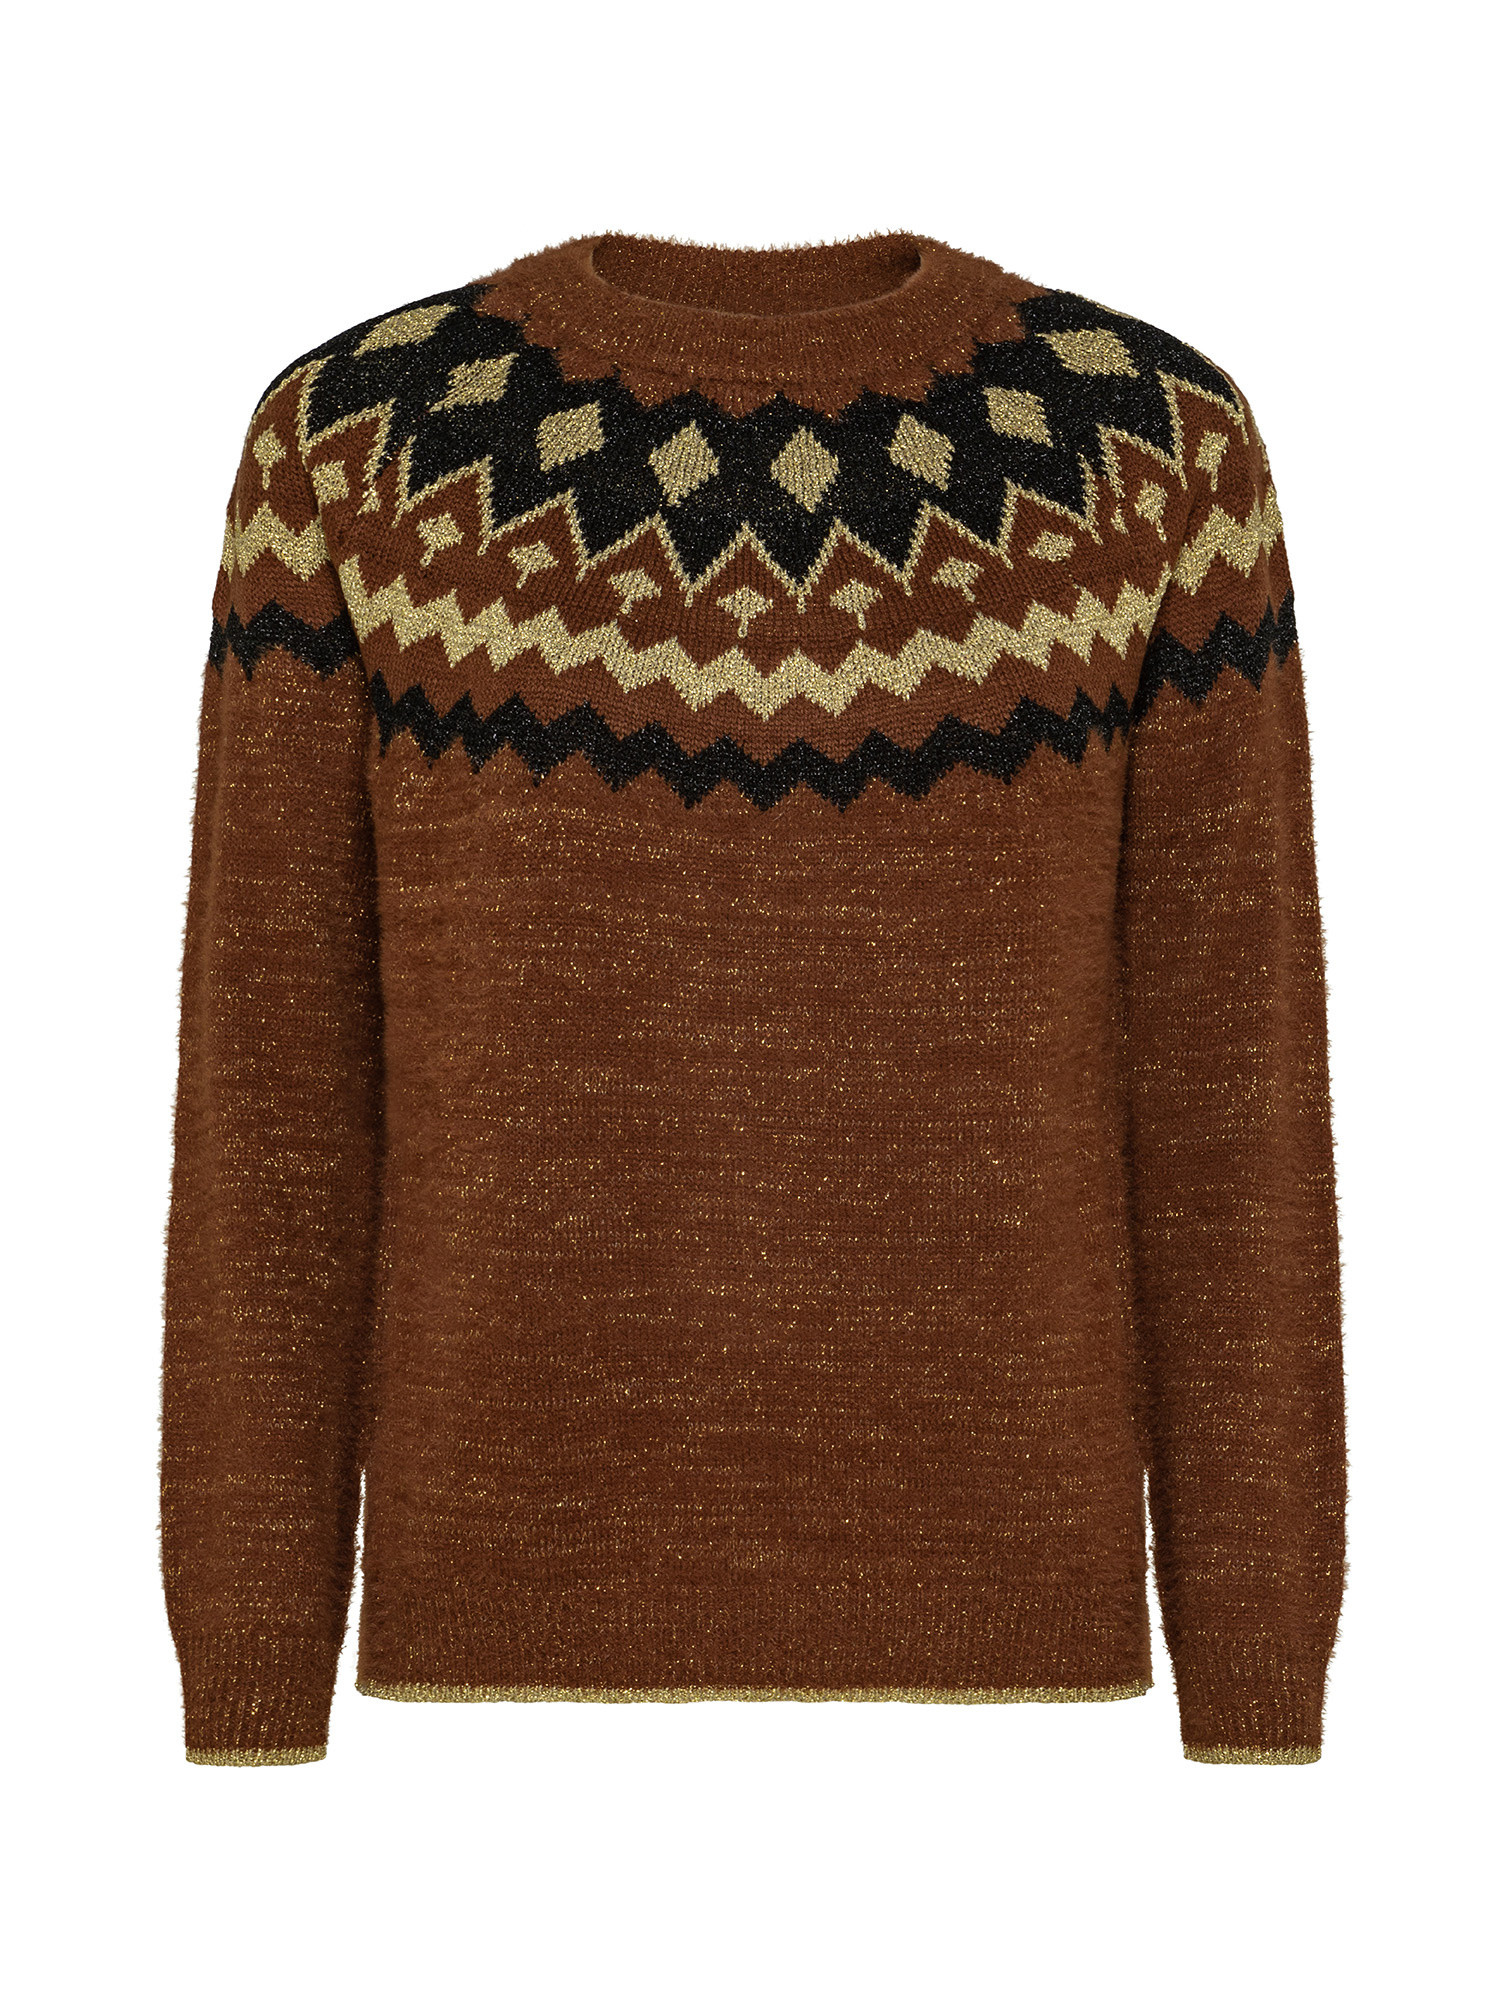 Koan - Crewneck pullover with lurex, Brown, large image number 0